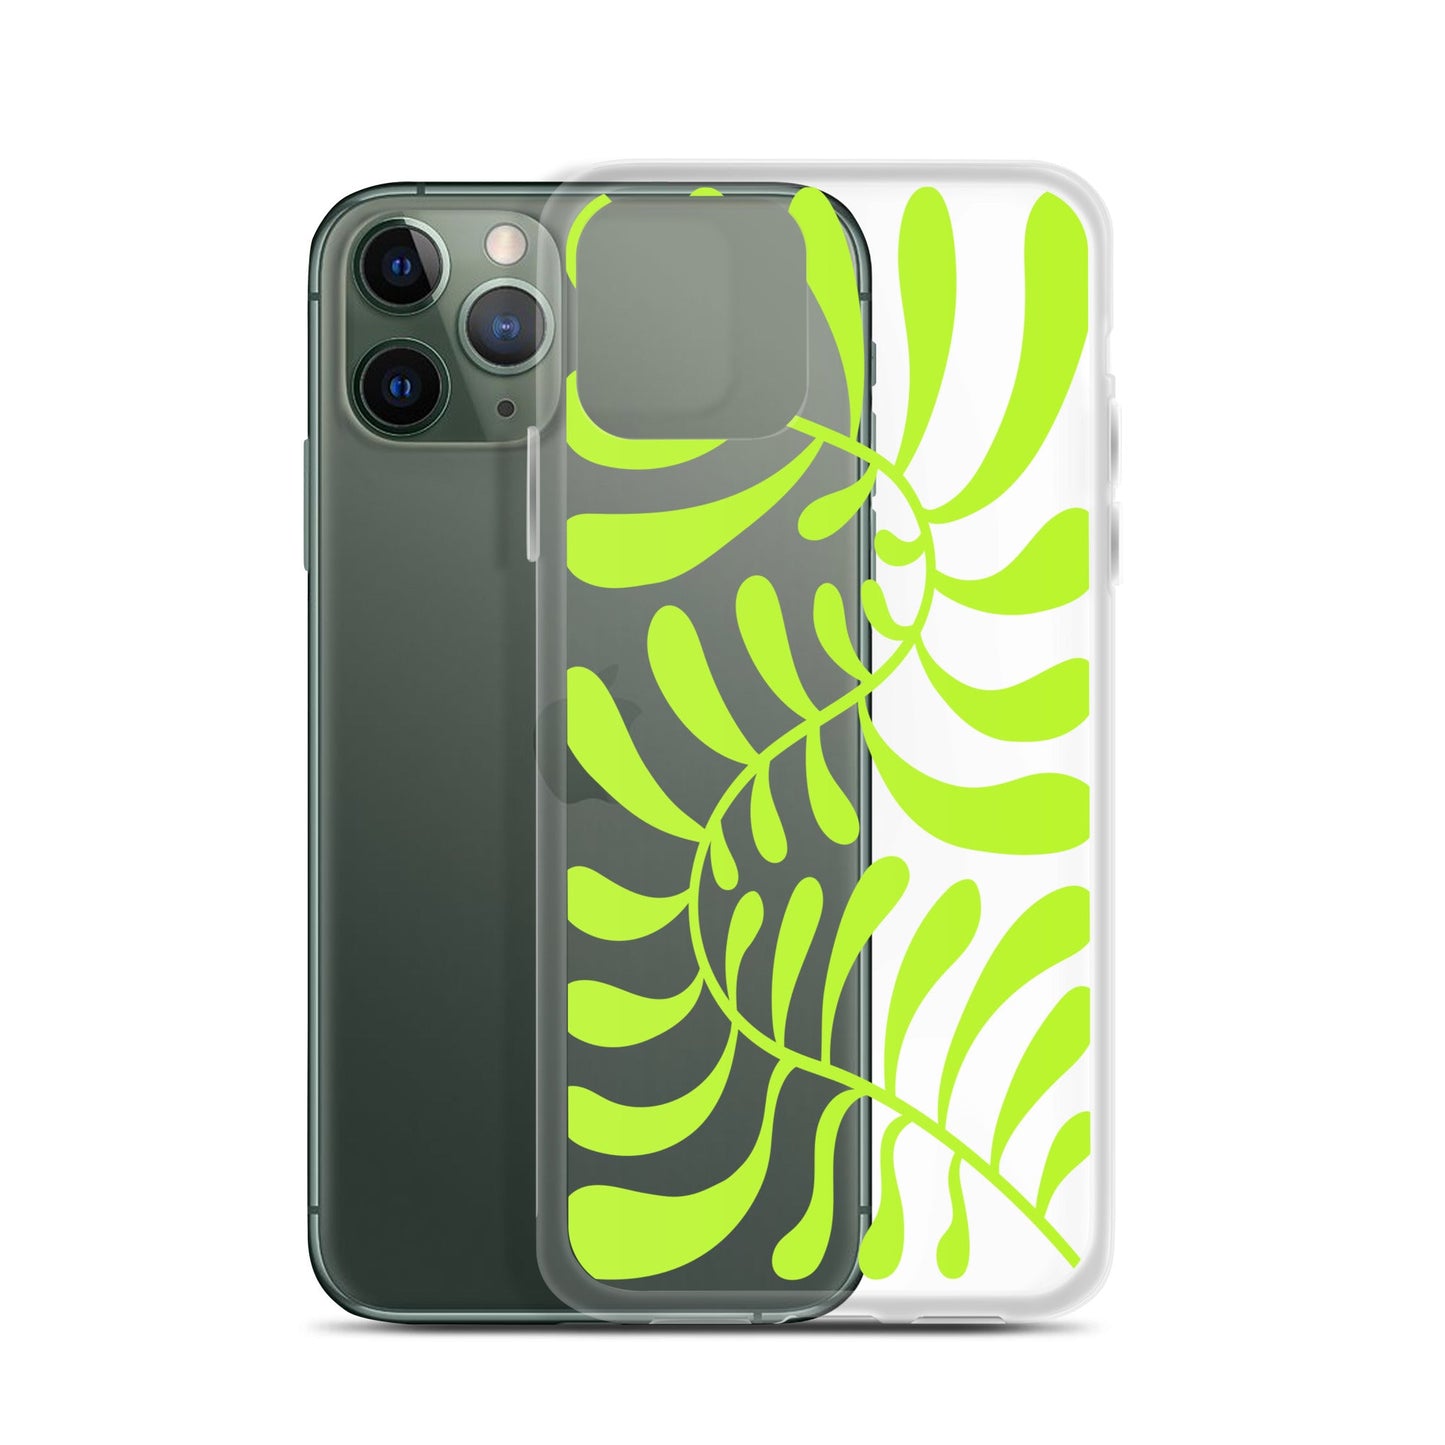 Neon Green Leaf iPhone Case